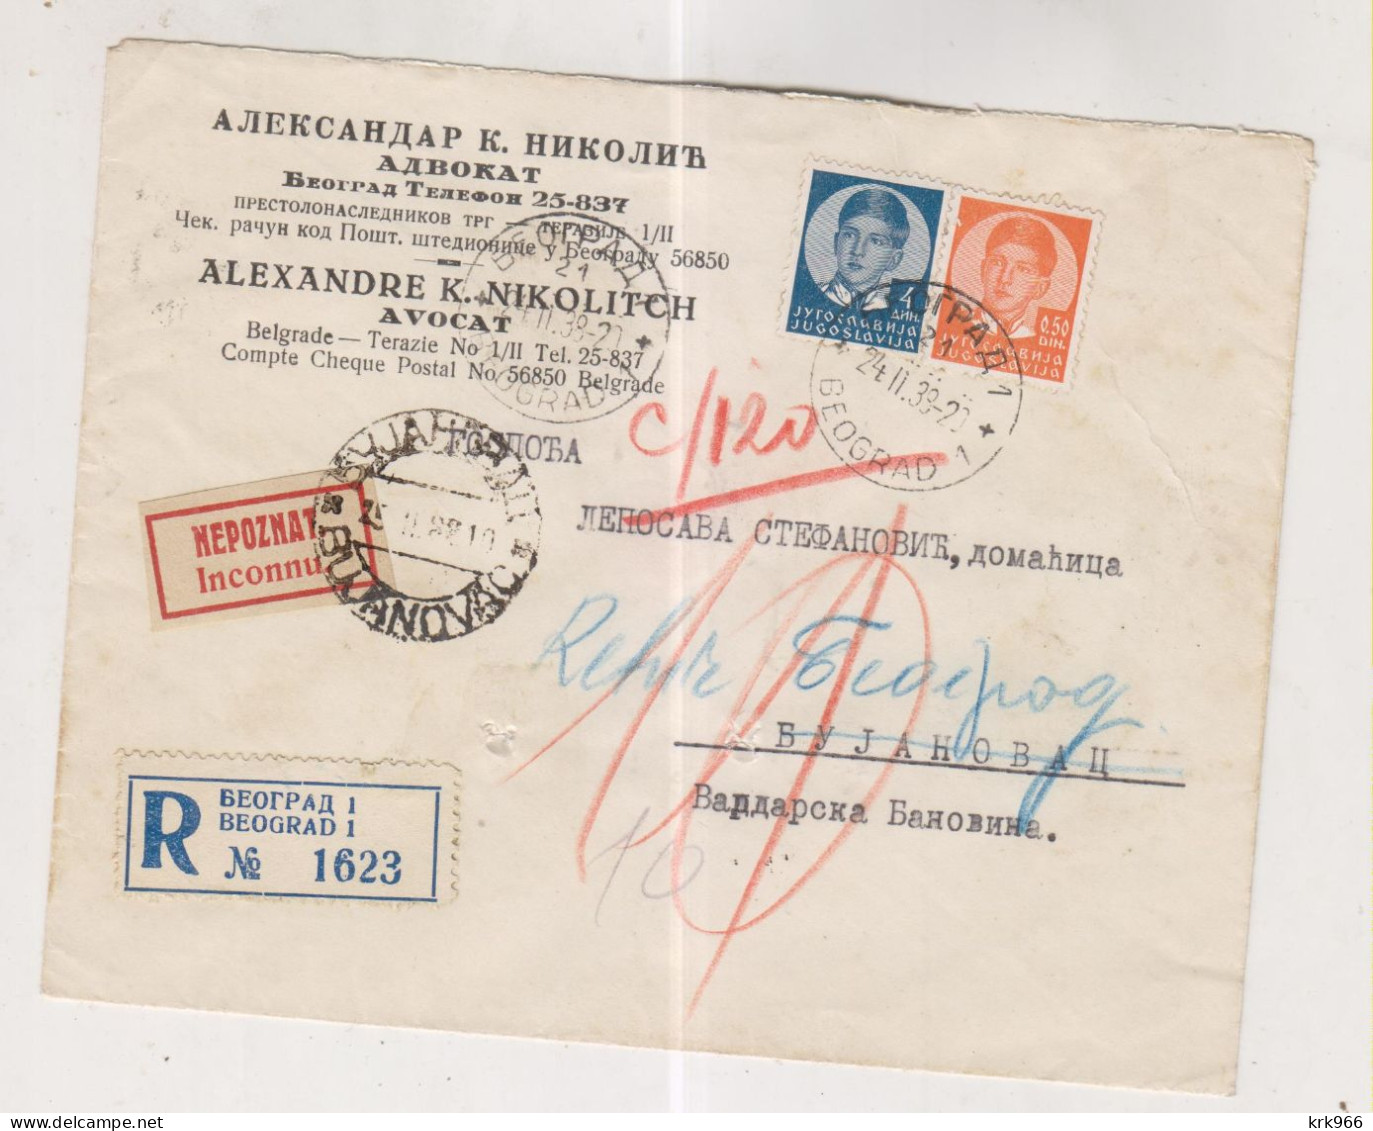 YUGOSLAVIA,1938 BEOGRAD Registered Cover To Bujanovac Returned - Covers & Documents